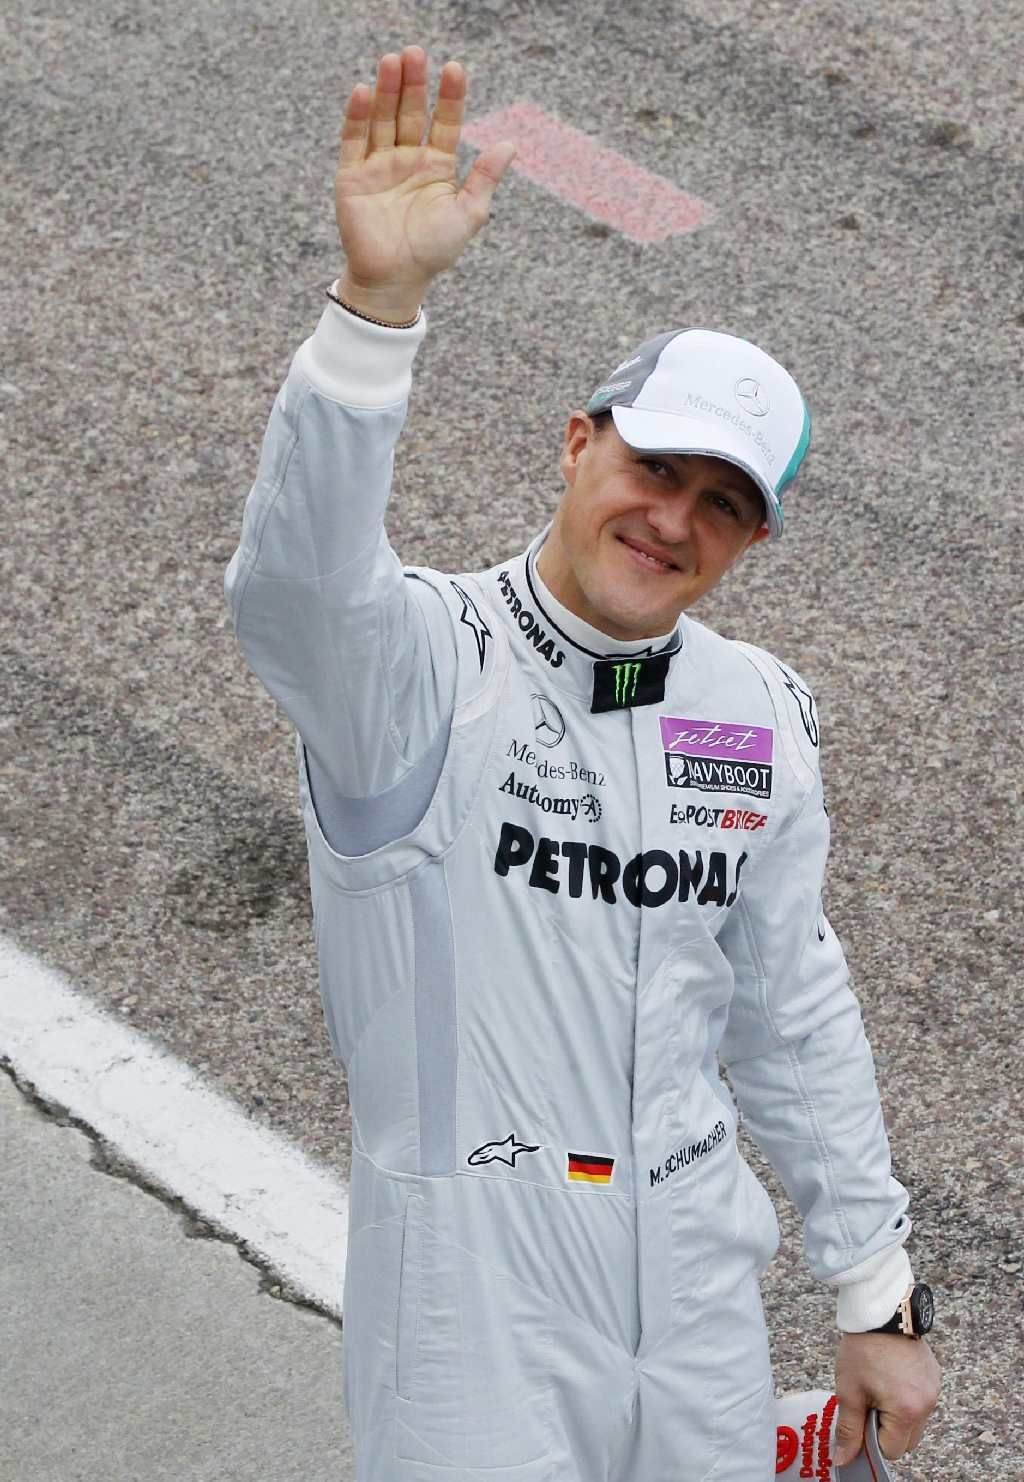 Mercedes představil monopost pro sezonu F1 2011